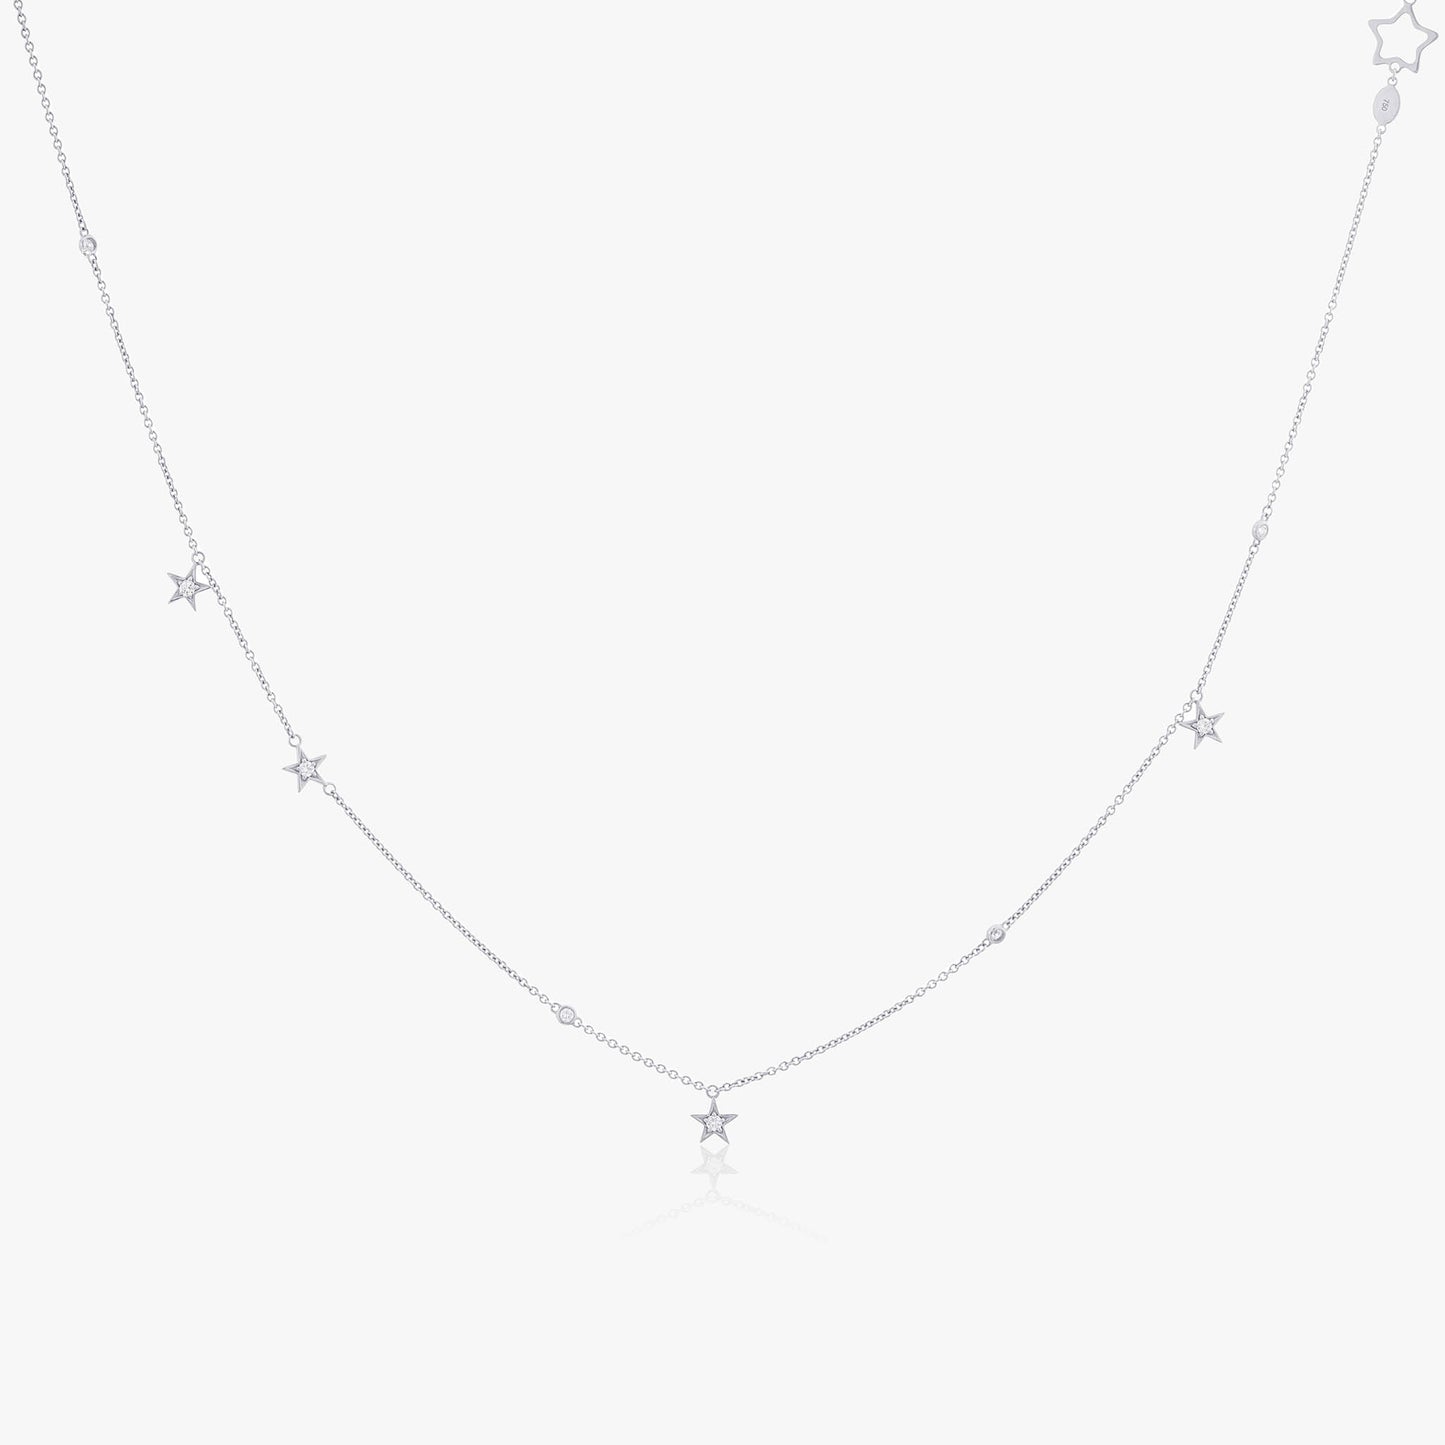 Guiding Star 18ct White Gold & Diamond Necklace, 40cm